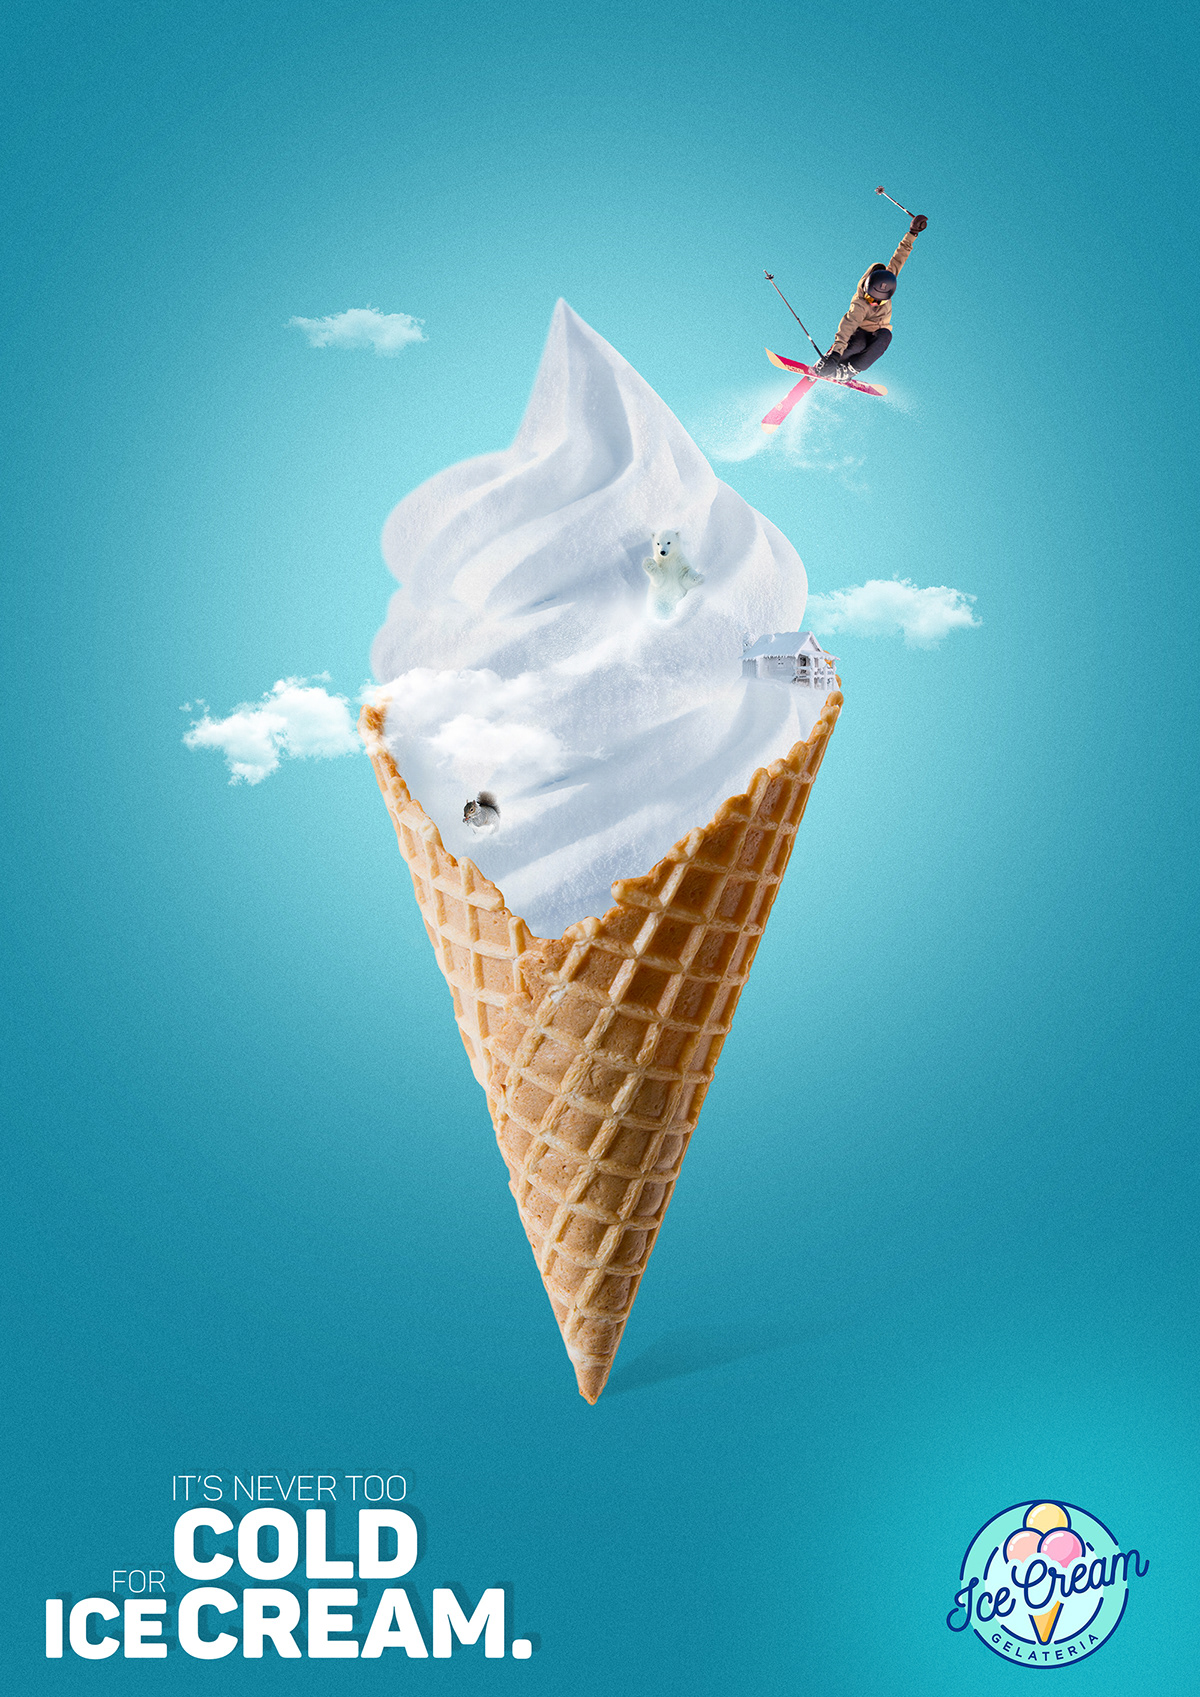 ice cream Ice cream manipulation creative Fun art advert Advertising manipulation poster brand ideas